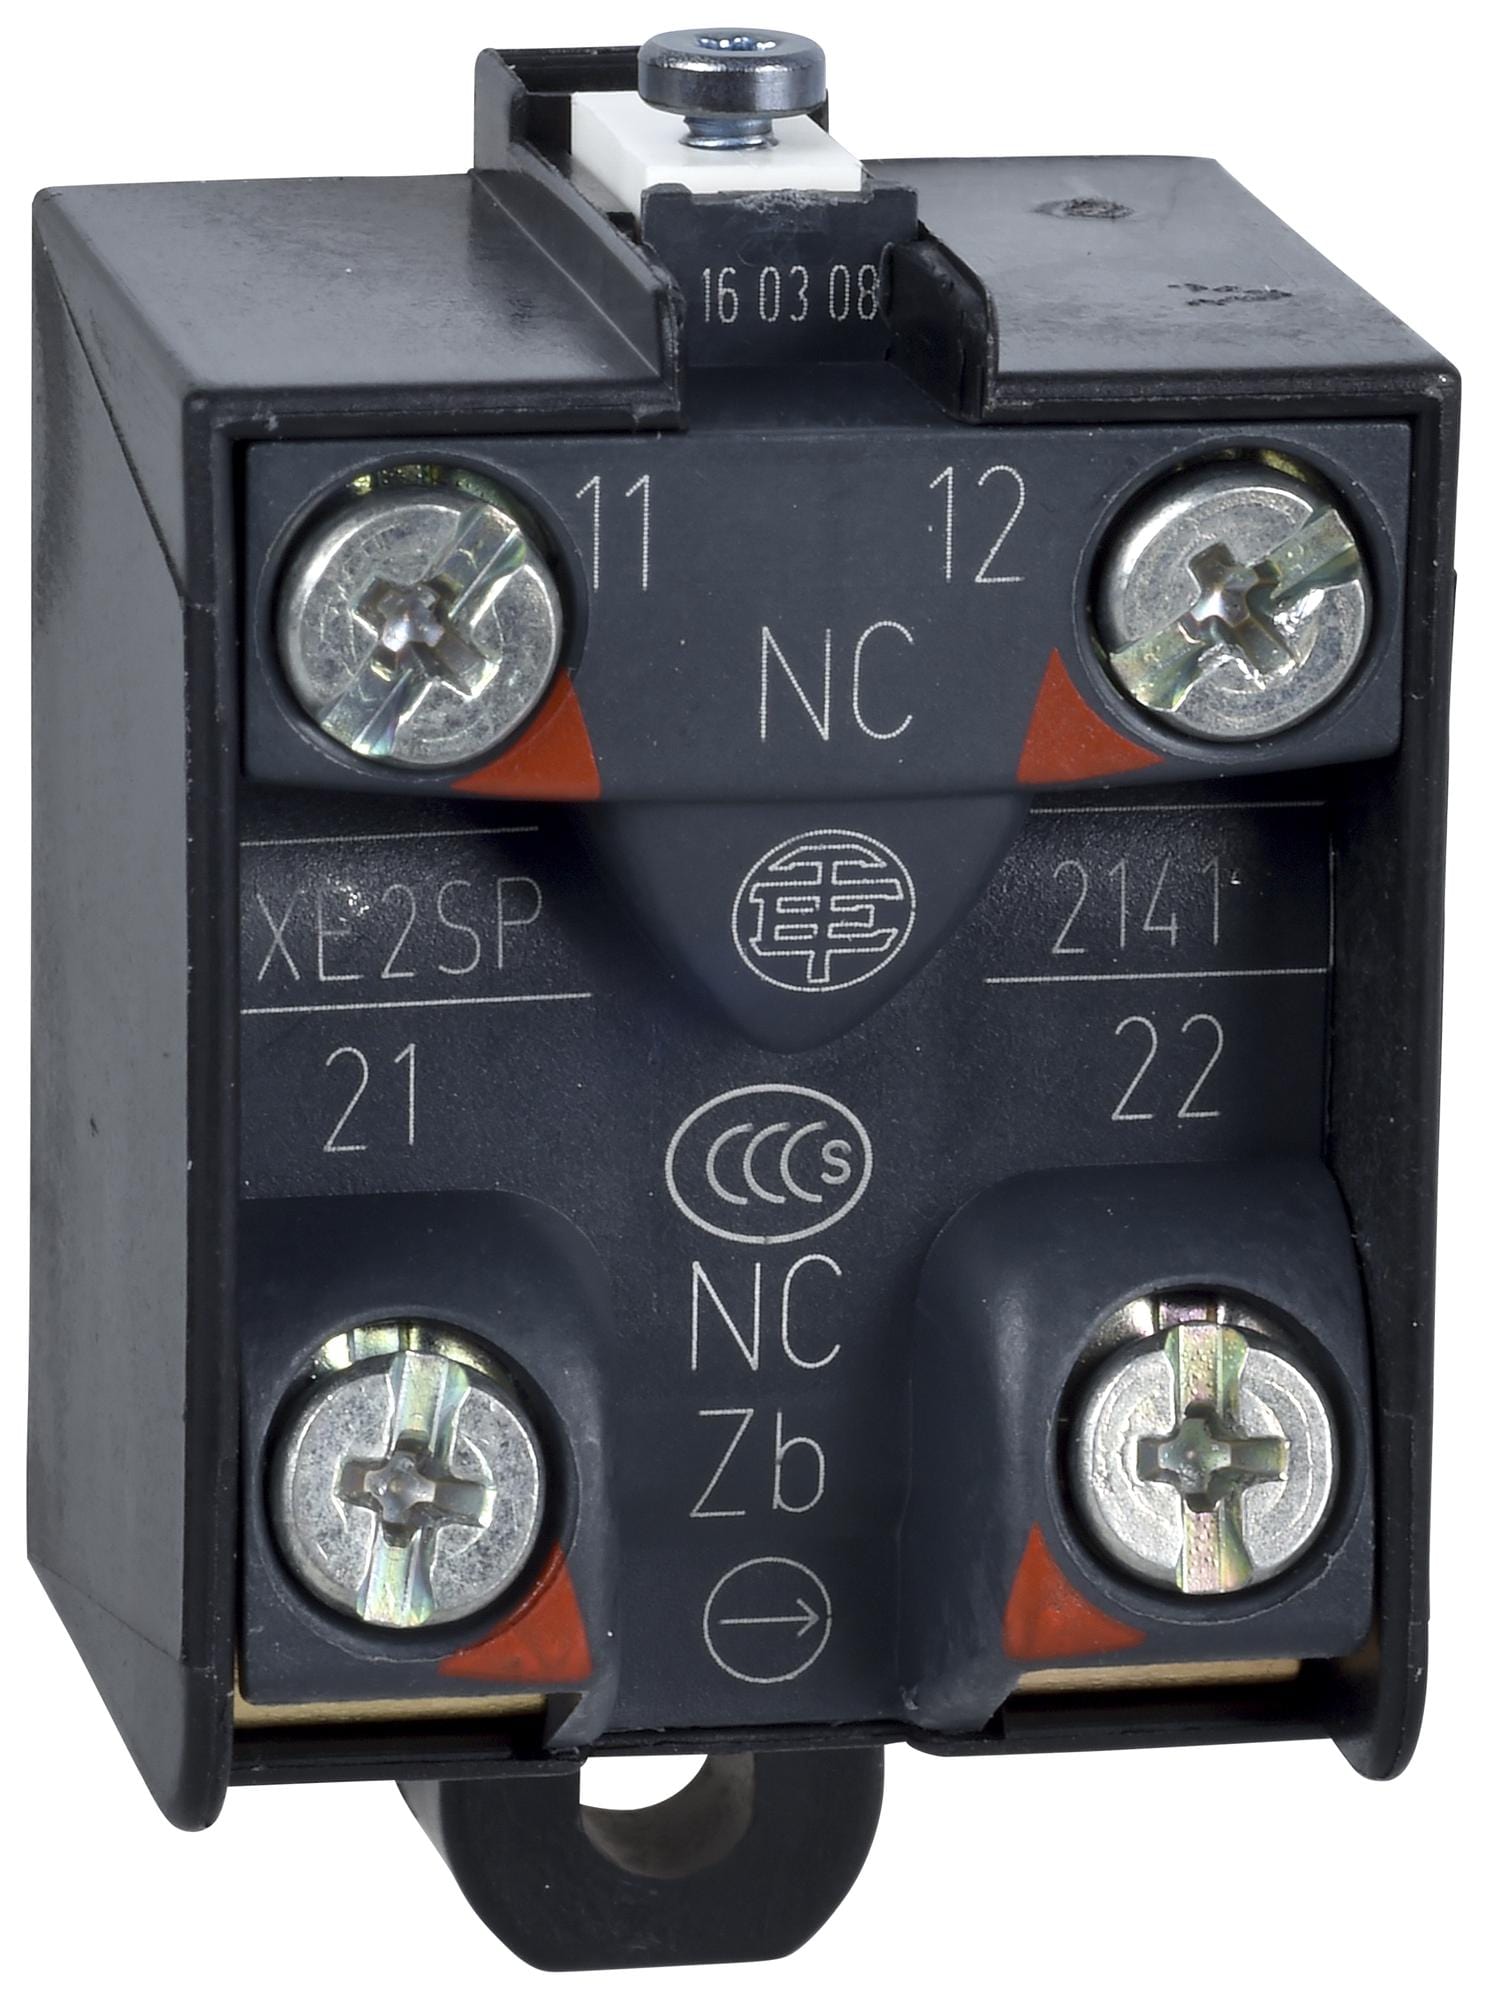 SCHNEIDER ELECTRIC Contact Blocks XE2SP2141 CONTACT BLOCK, 600V, 10A, 2POLE SCHNEIDER ELECTRIC 3114838 XE2SP2141